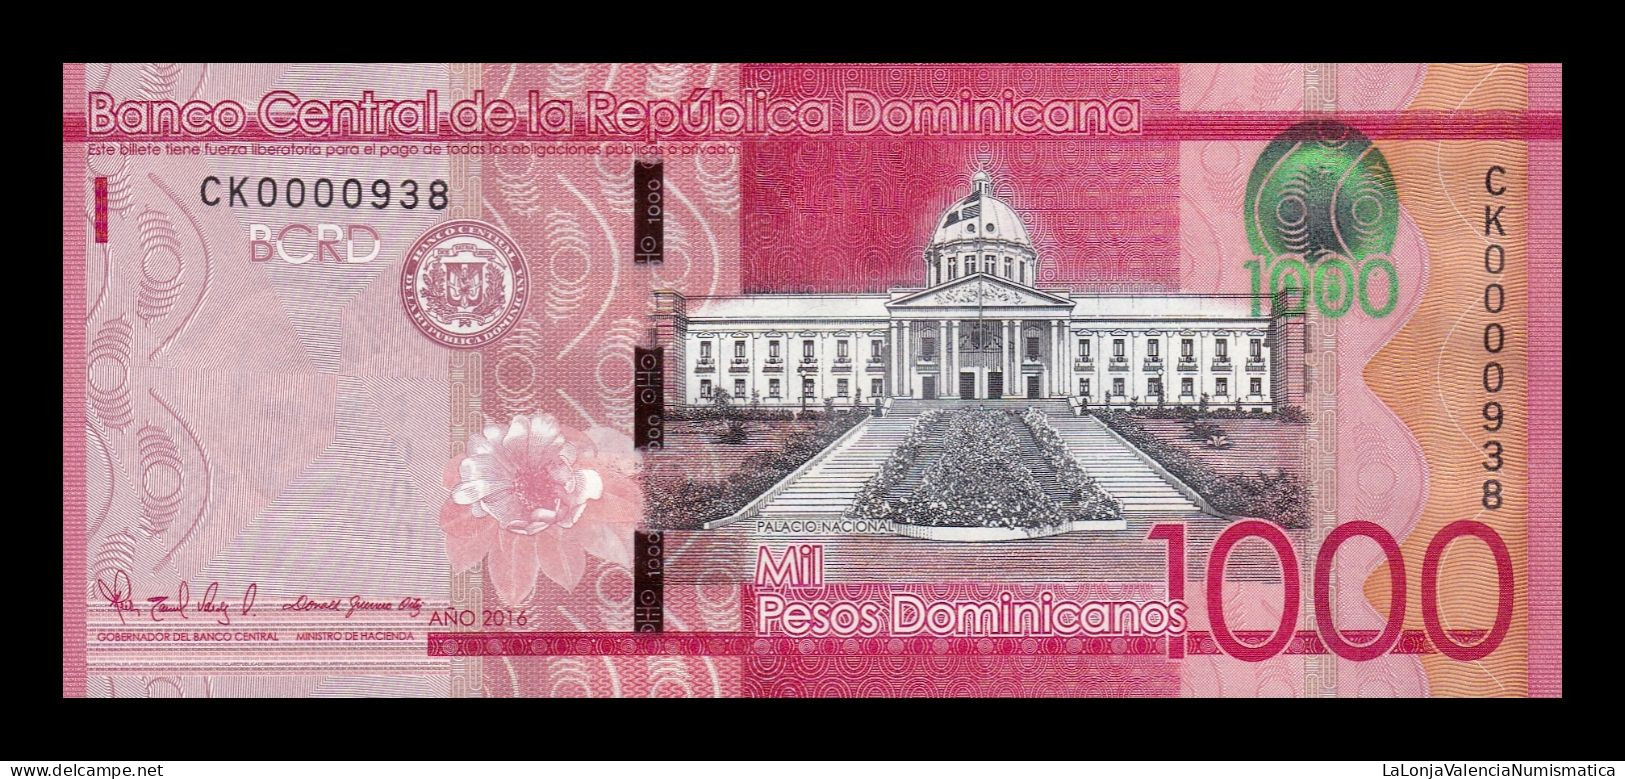 República Dominicana 1000 Pesos Dominicanos 2016 Pick 193c Low Serial 938 Sc Unc - Repubblica Dominicana